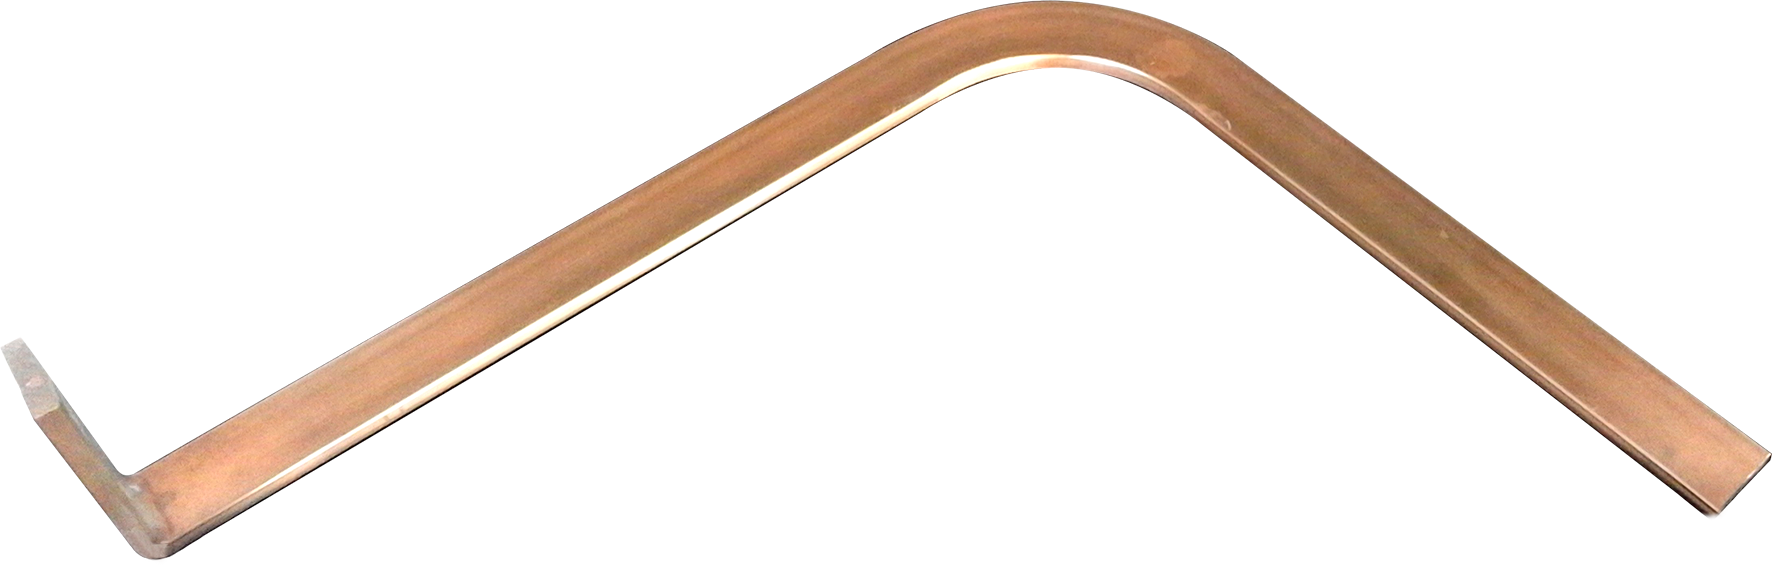 bent copper busbar